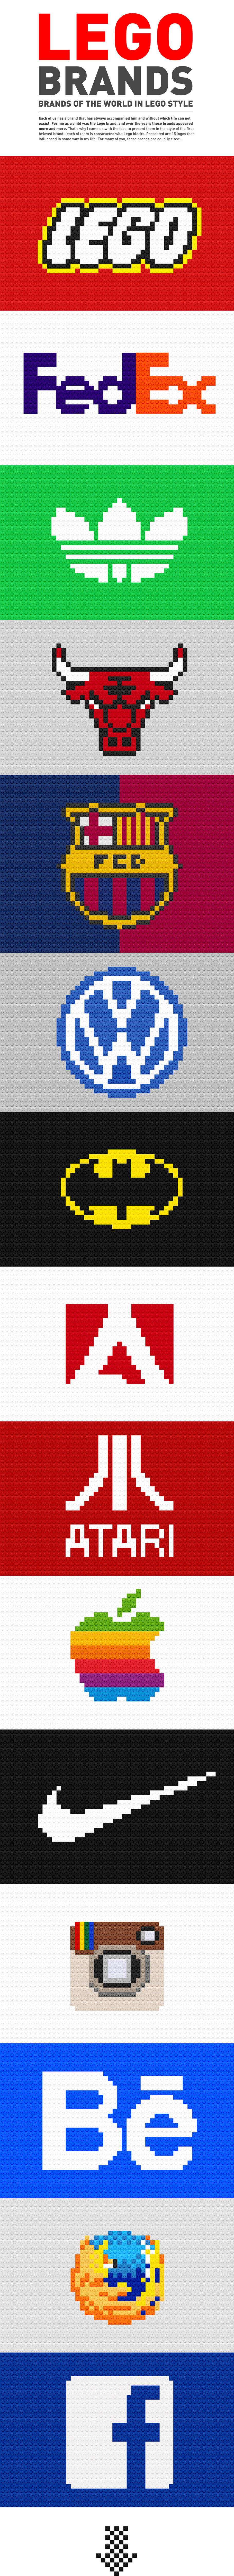 logo brands Nike adobe atari batman LEGO barcelona apple adidas fedex volkswagen Behance facebook istagram